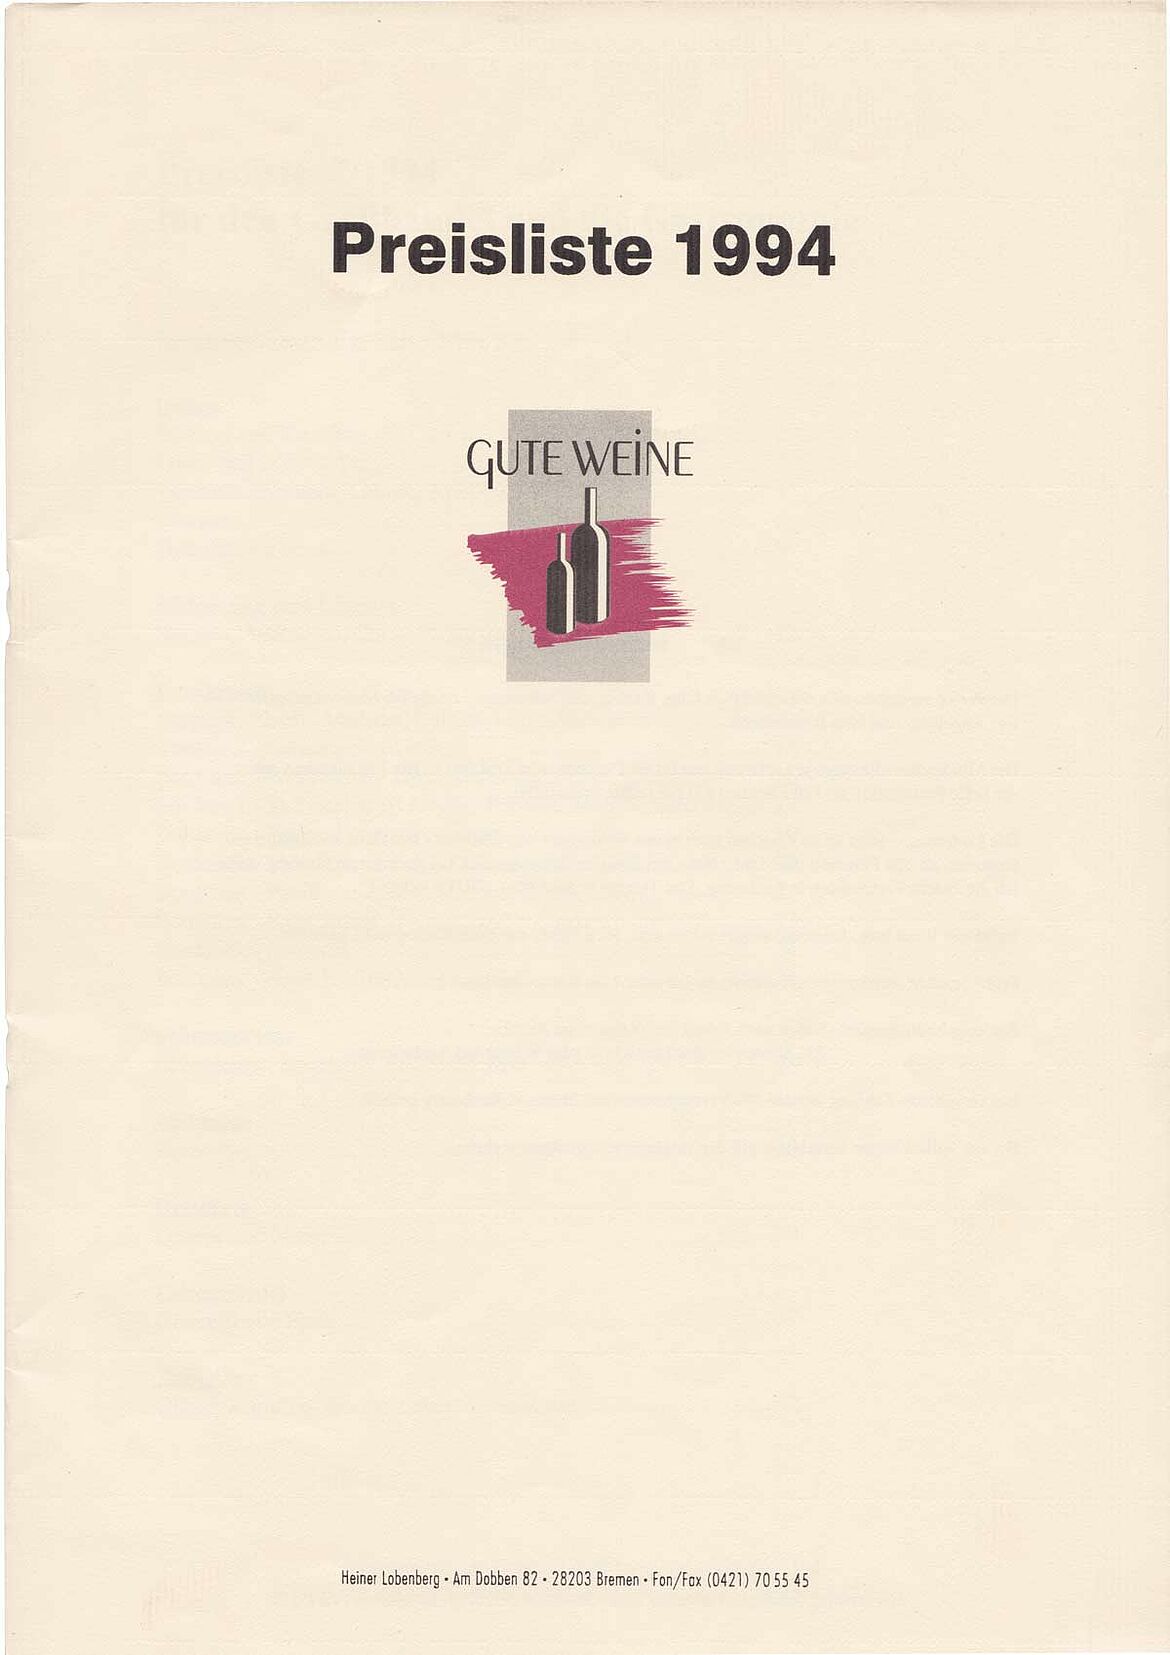 Die erste Preisliste 1994